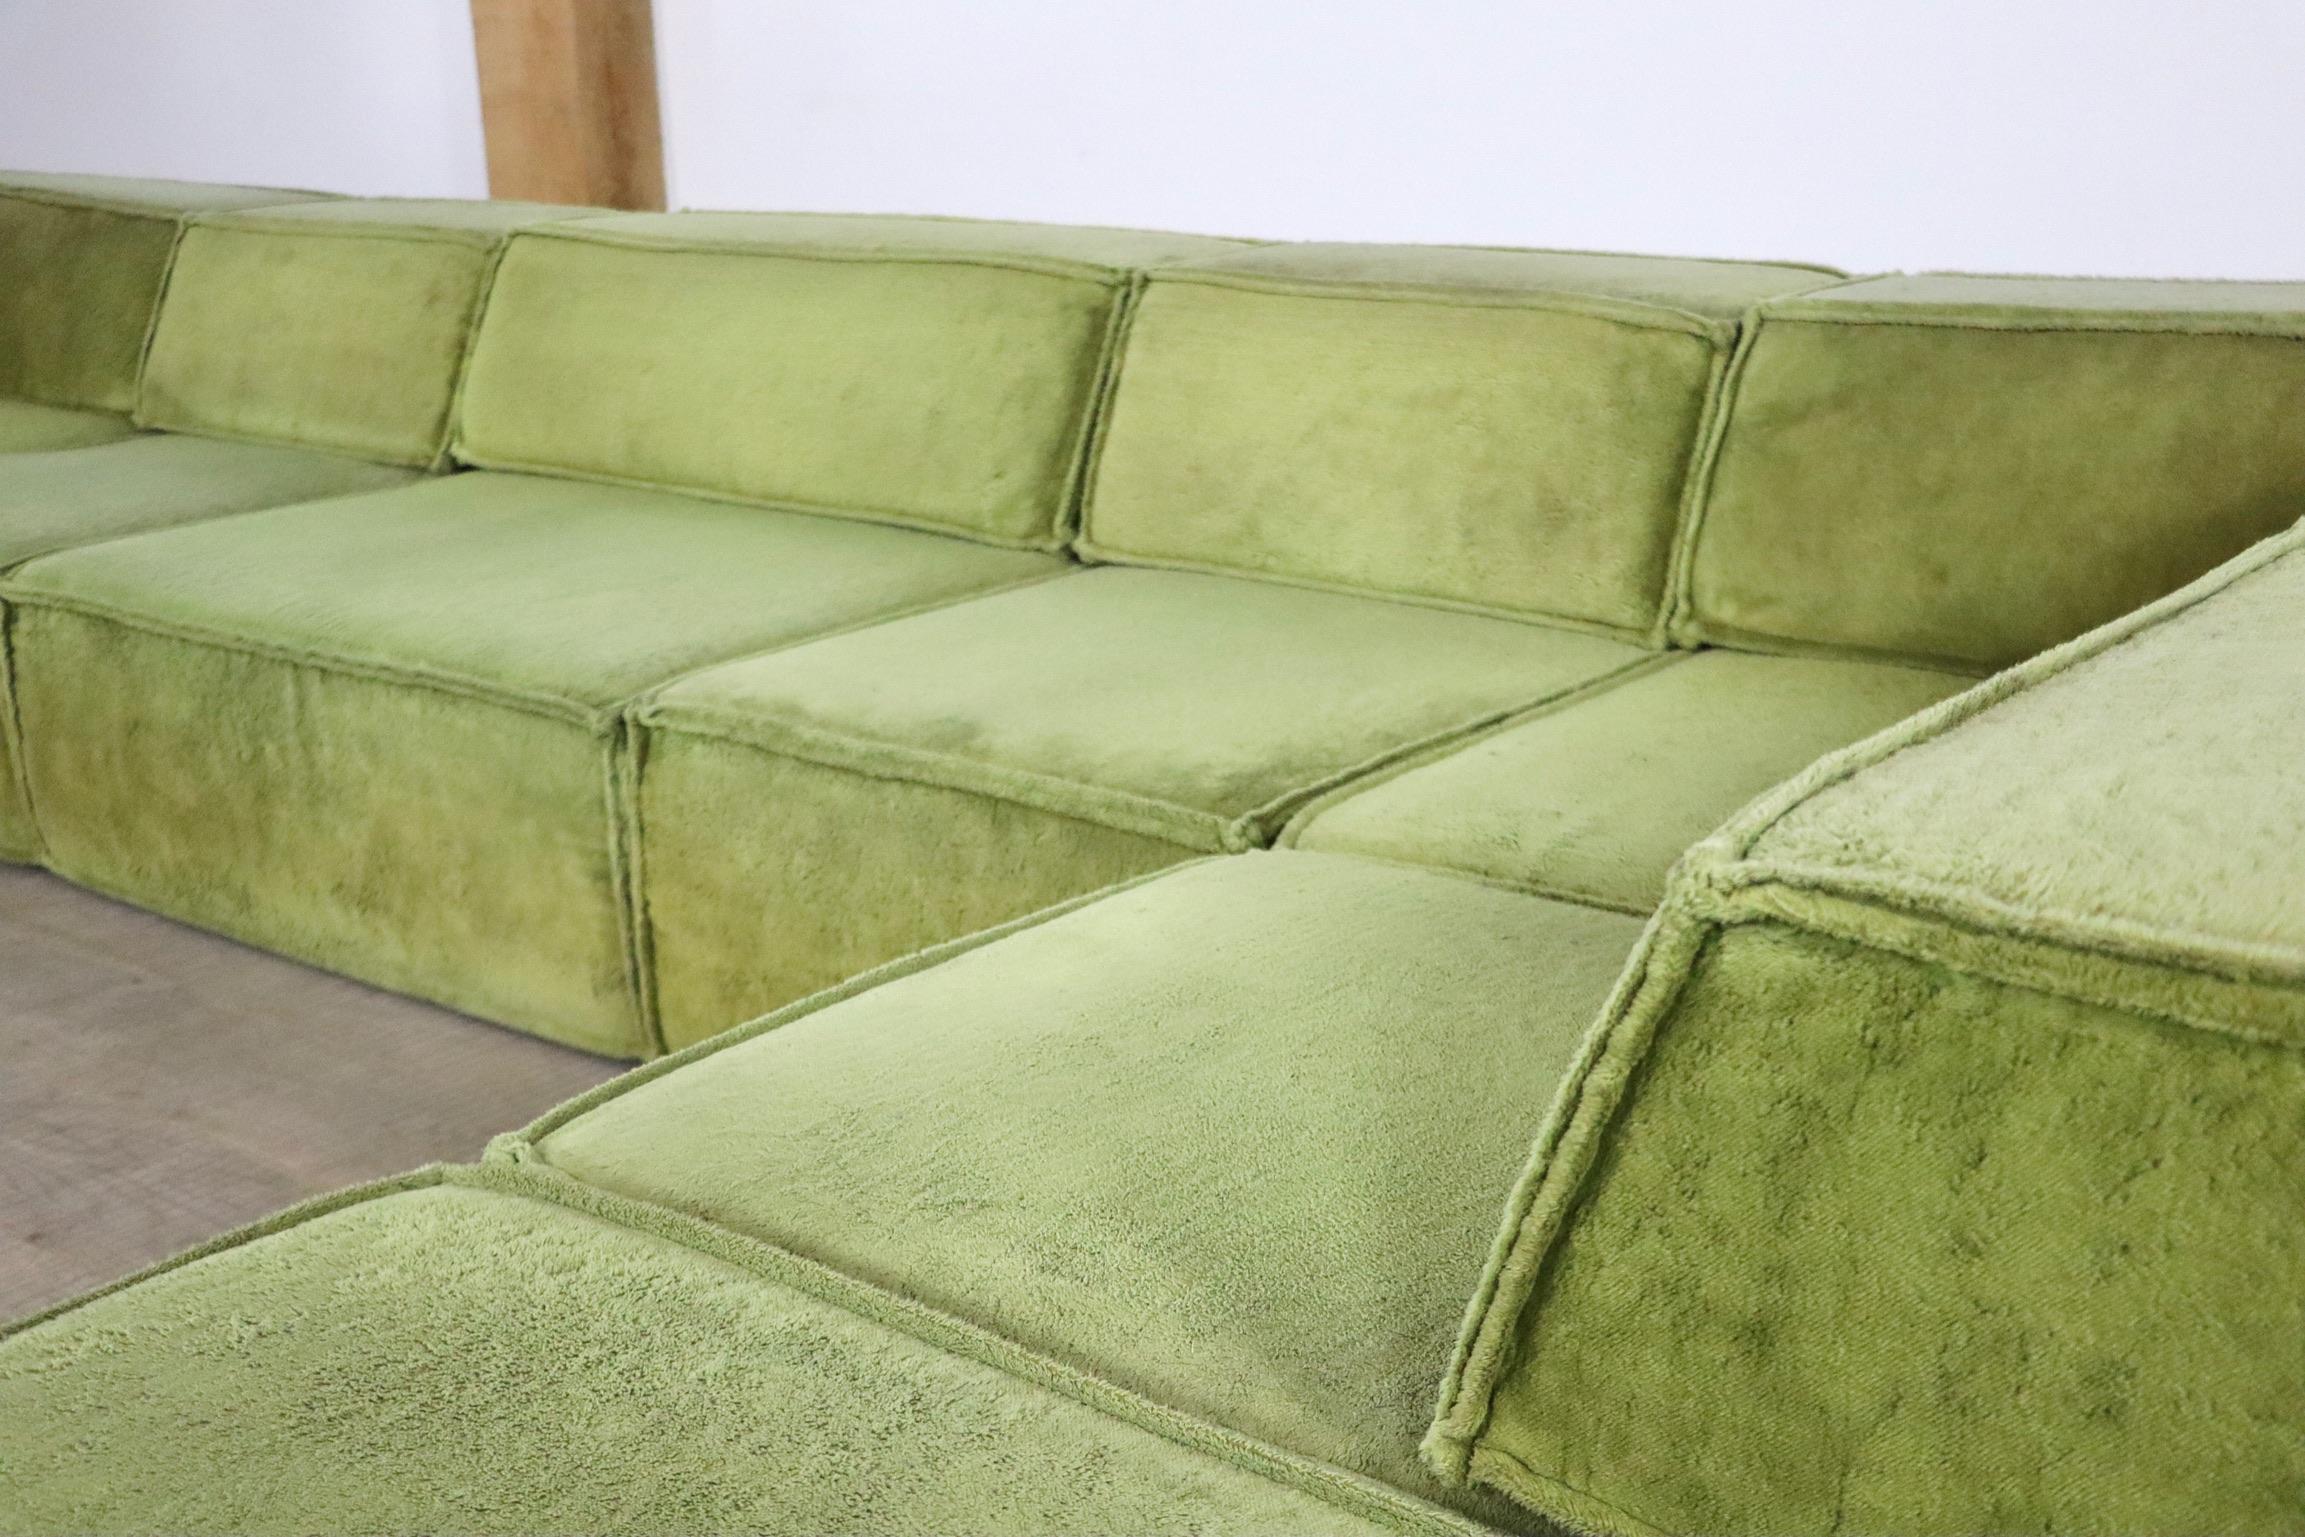 Upholstery COR Trio modular sofa in green teddy by Team Form AG, 1970s